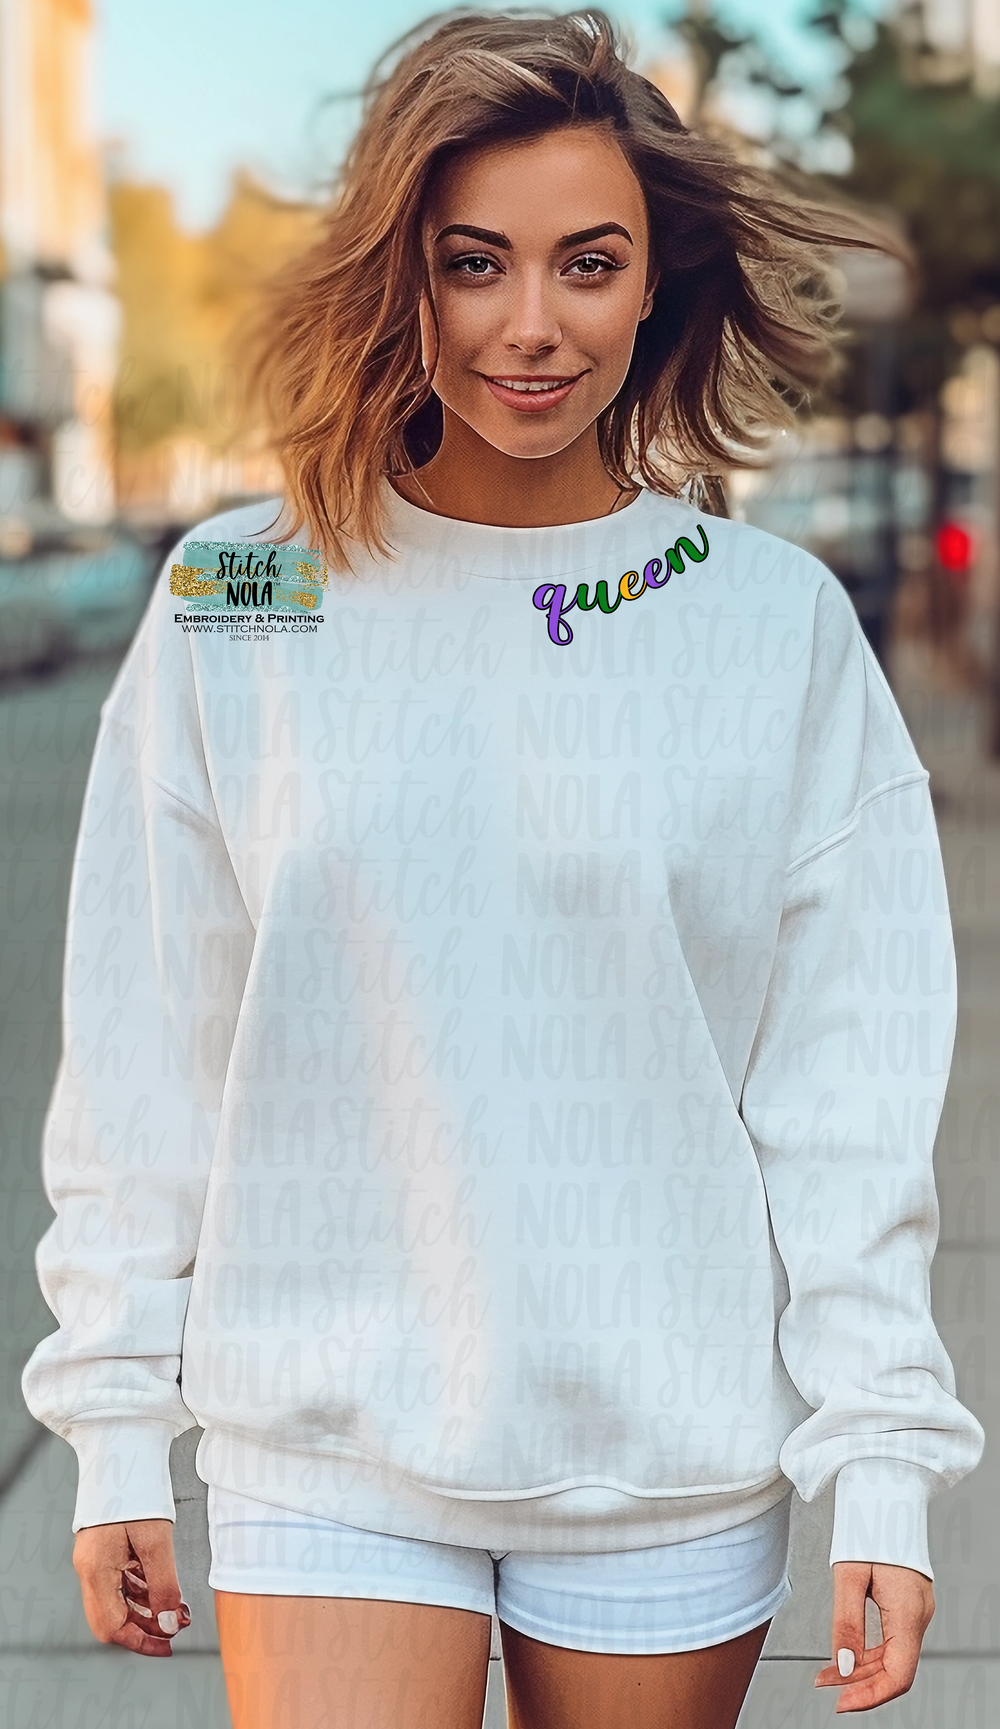 Mardi Gras Queen Curved Collar Printed Sweatshirt